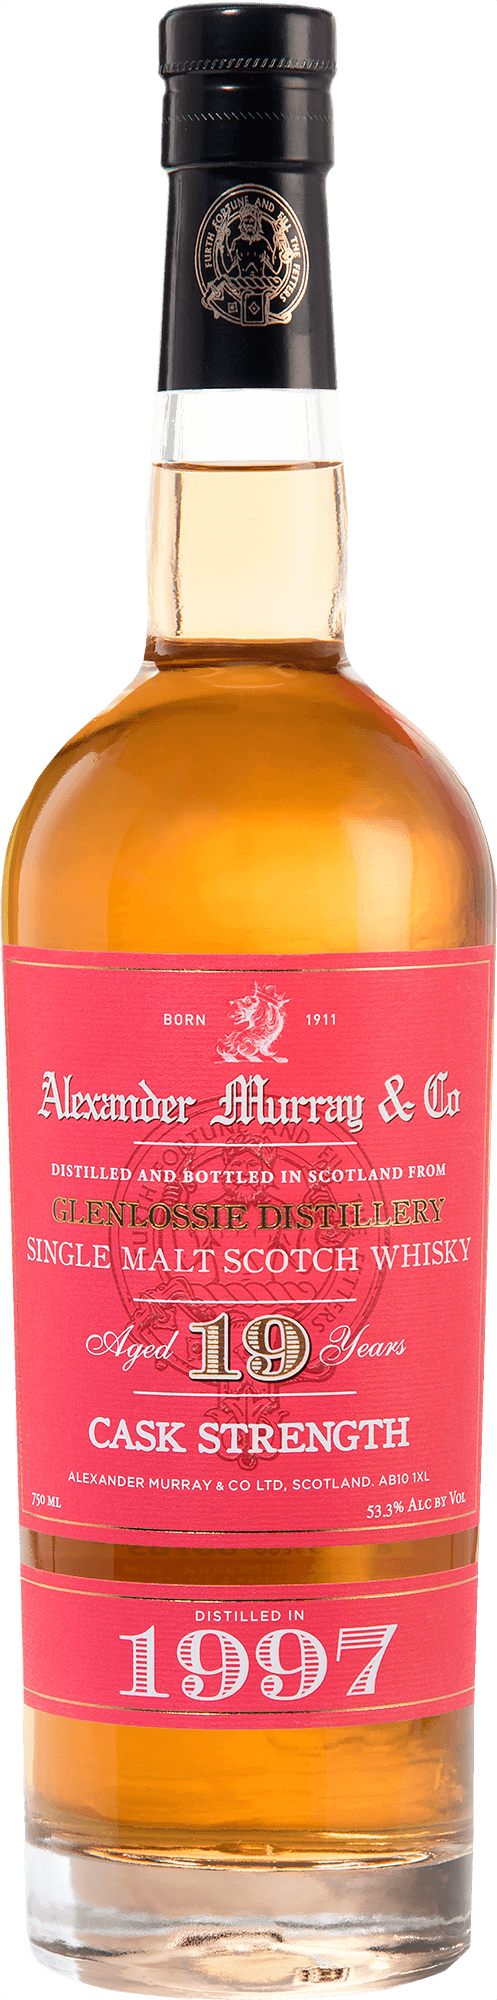 Alexander Murray 1997 Glenlossie 19 Year Old Single Malt Scotch Whisky